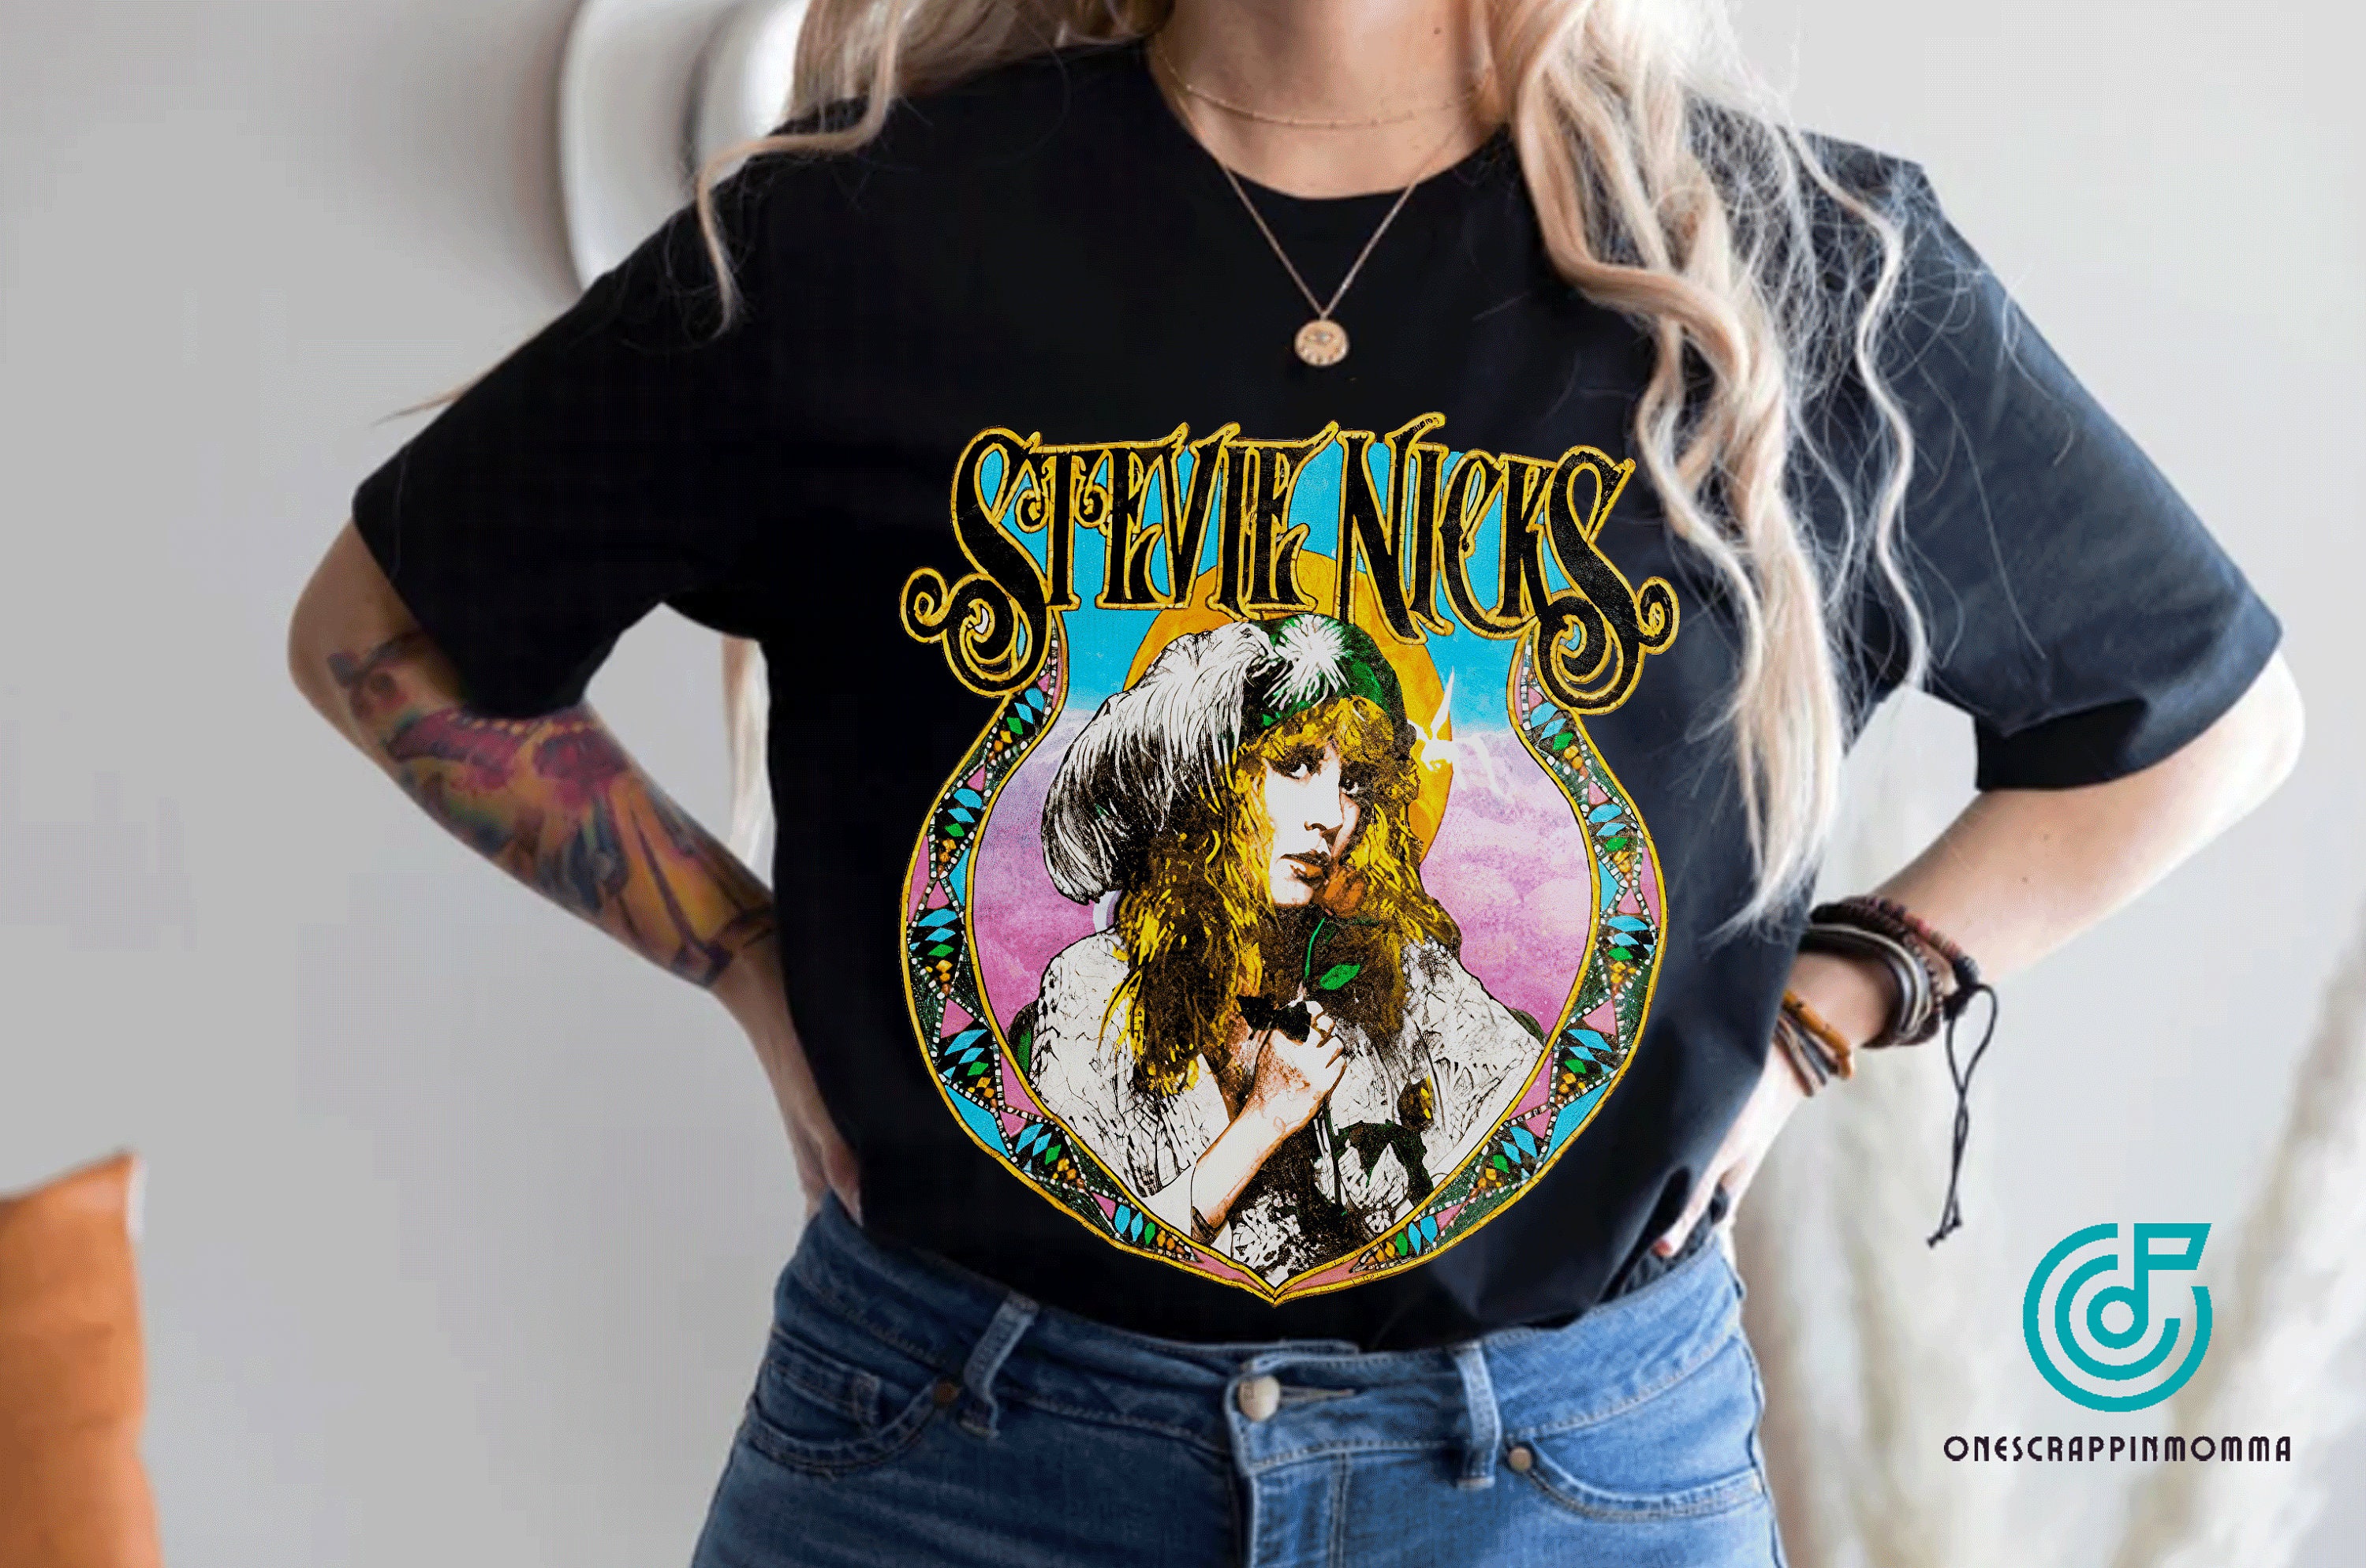 Stevie Nicks Vintage Fleetwood Mac Rock Band Unisex T-Shirt